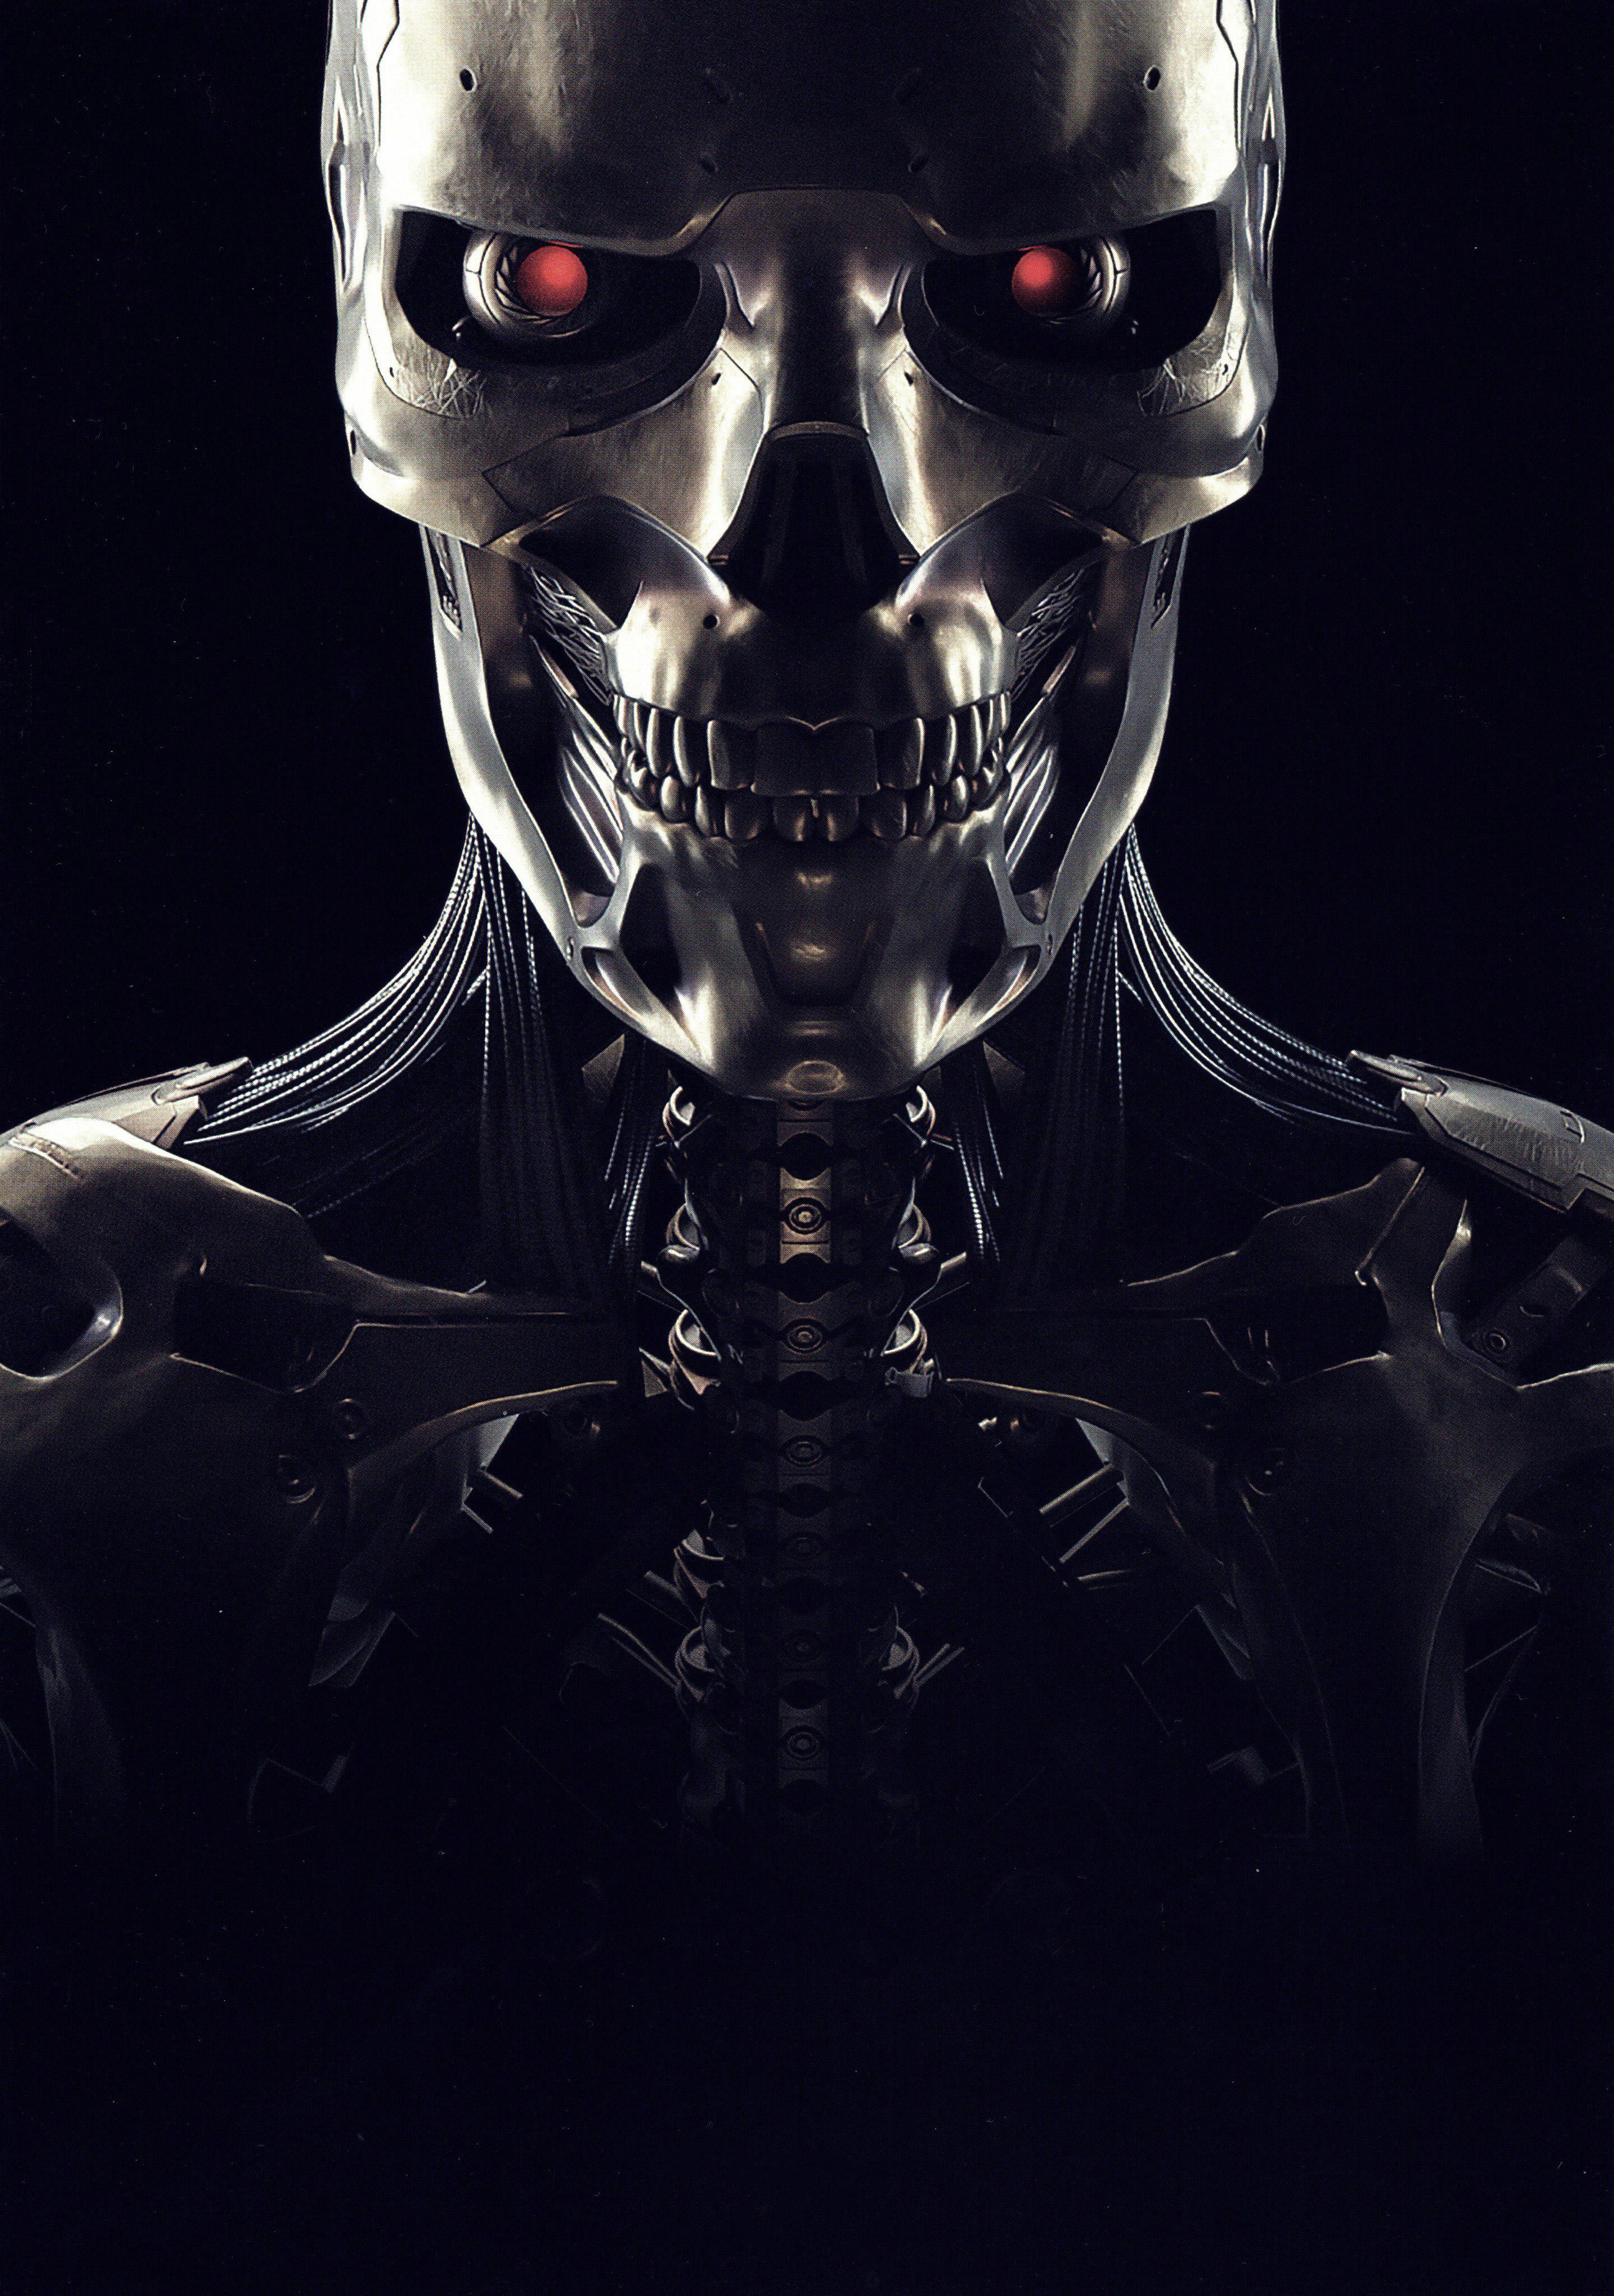 Terminator 6 Wallpaper, HD Movies 4K Wallpaper, Image, Photo